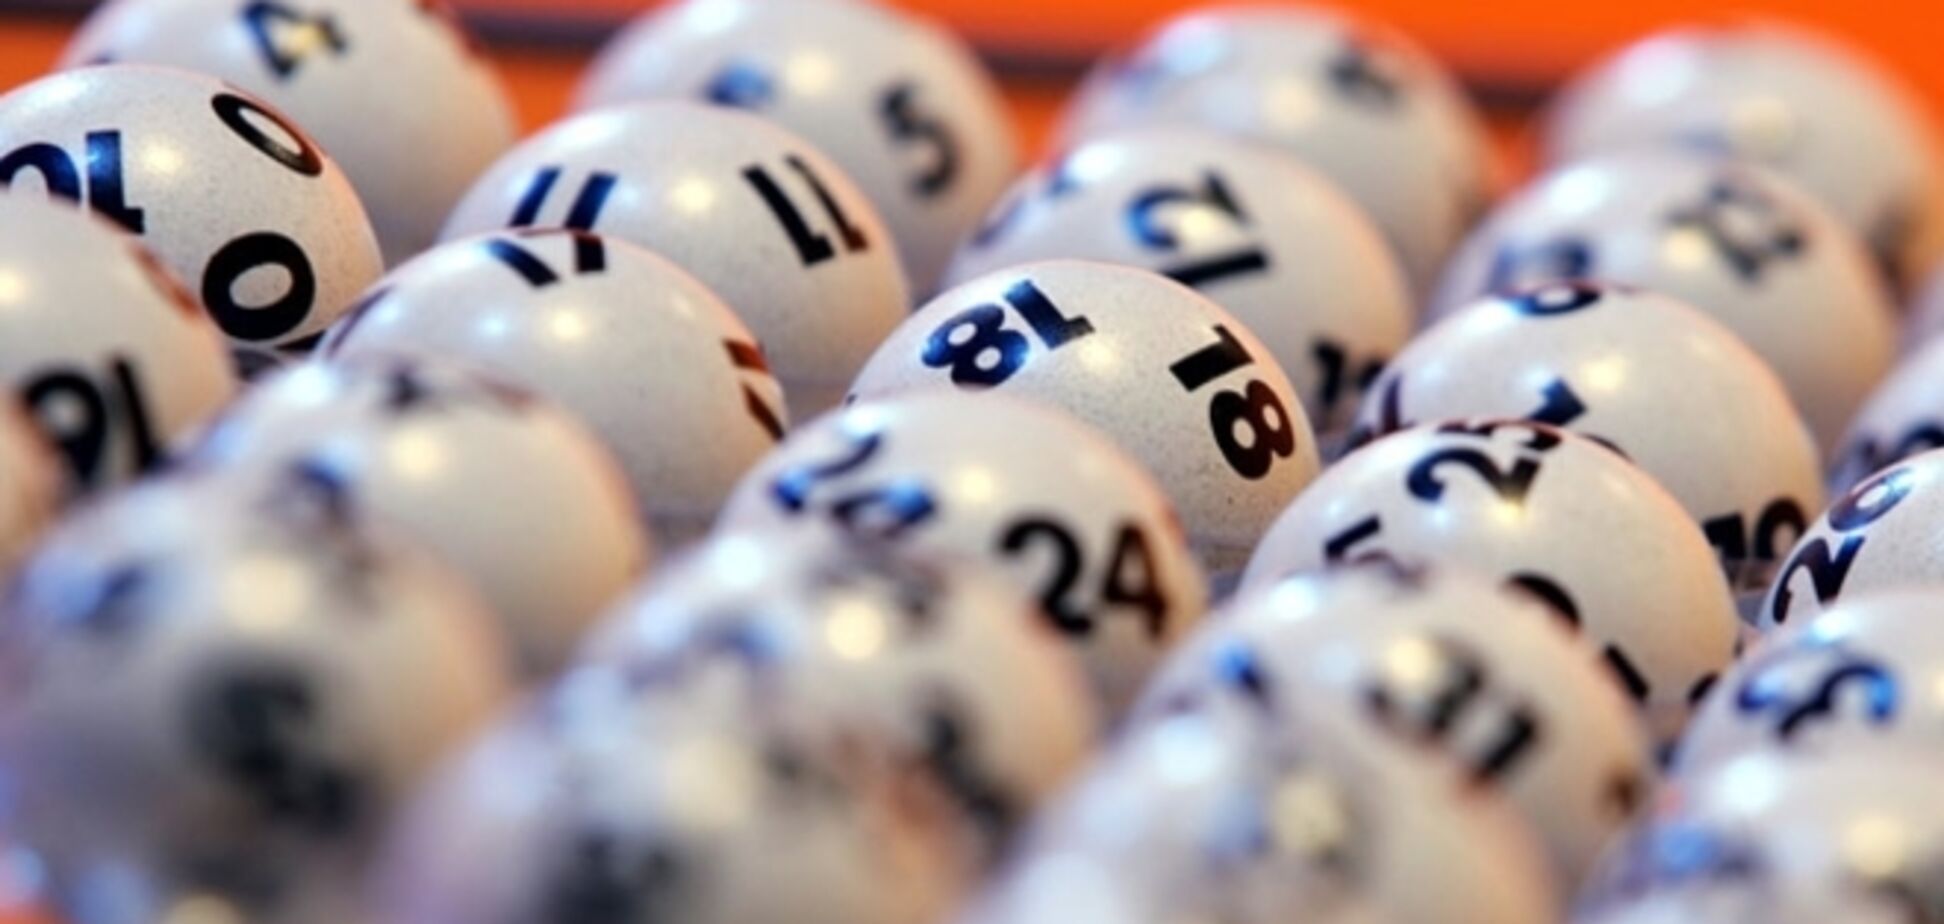 МВД начало возврат ранее изъятого оборудования операторам лотерейного рынка